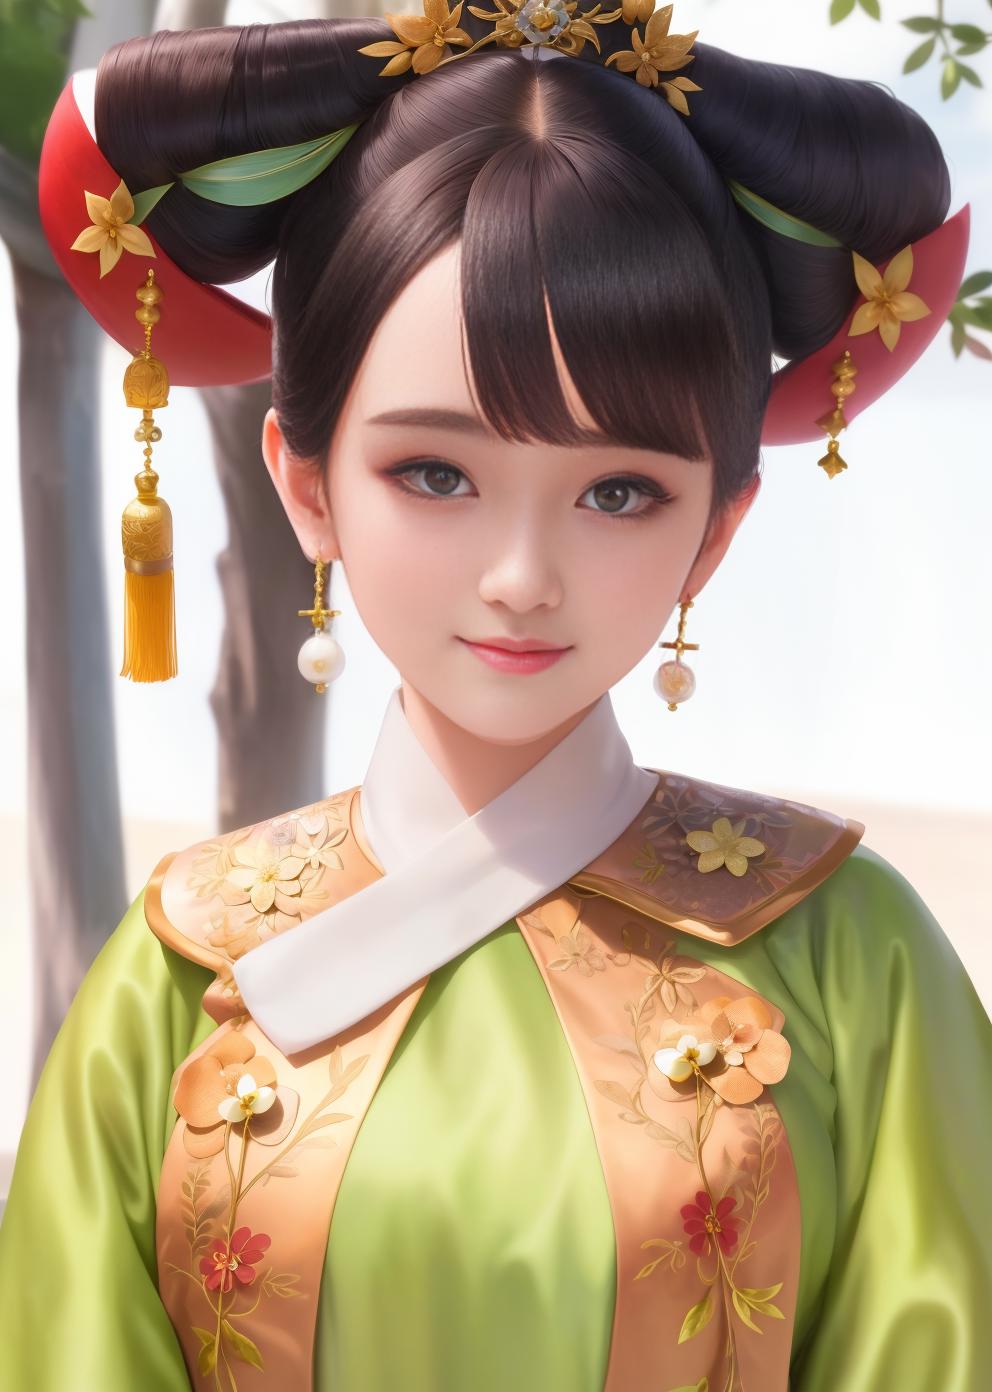 Qing Period Dresses - 清代后宫服 image by Nitram